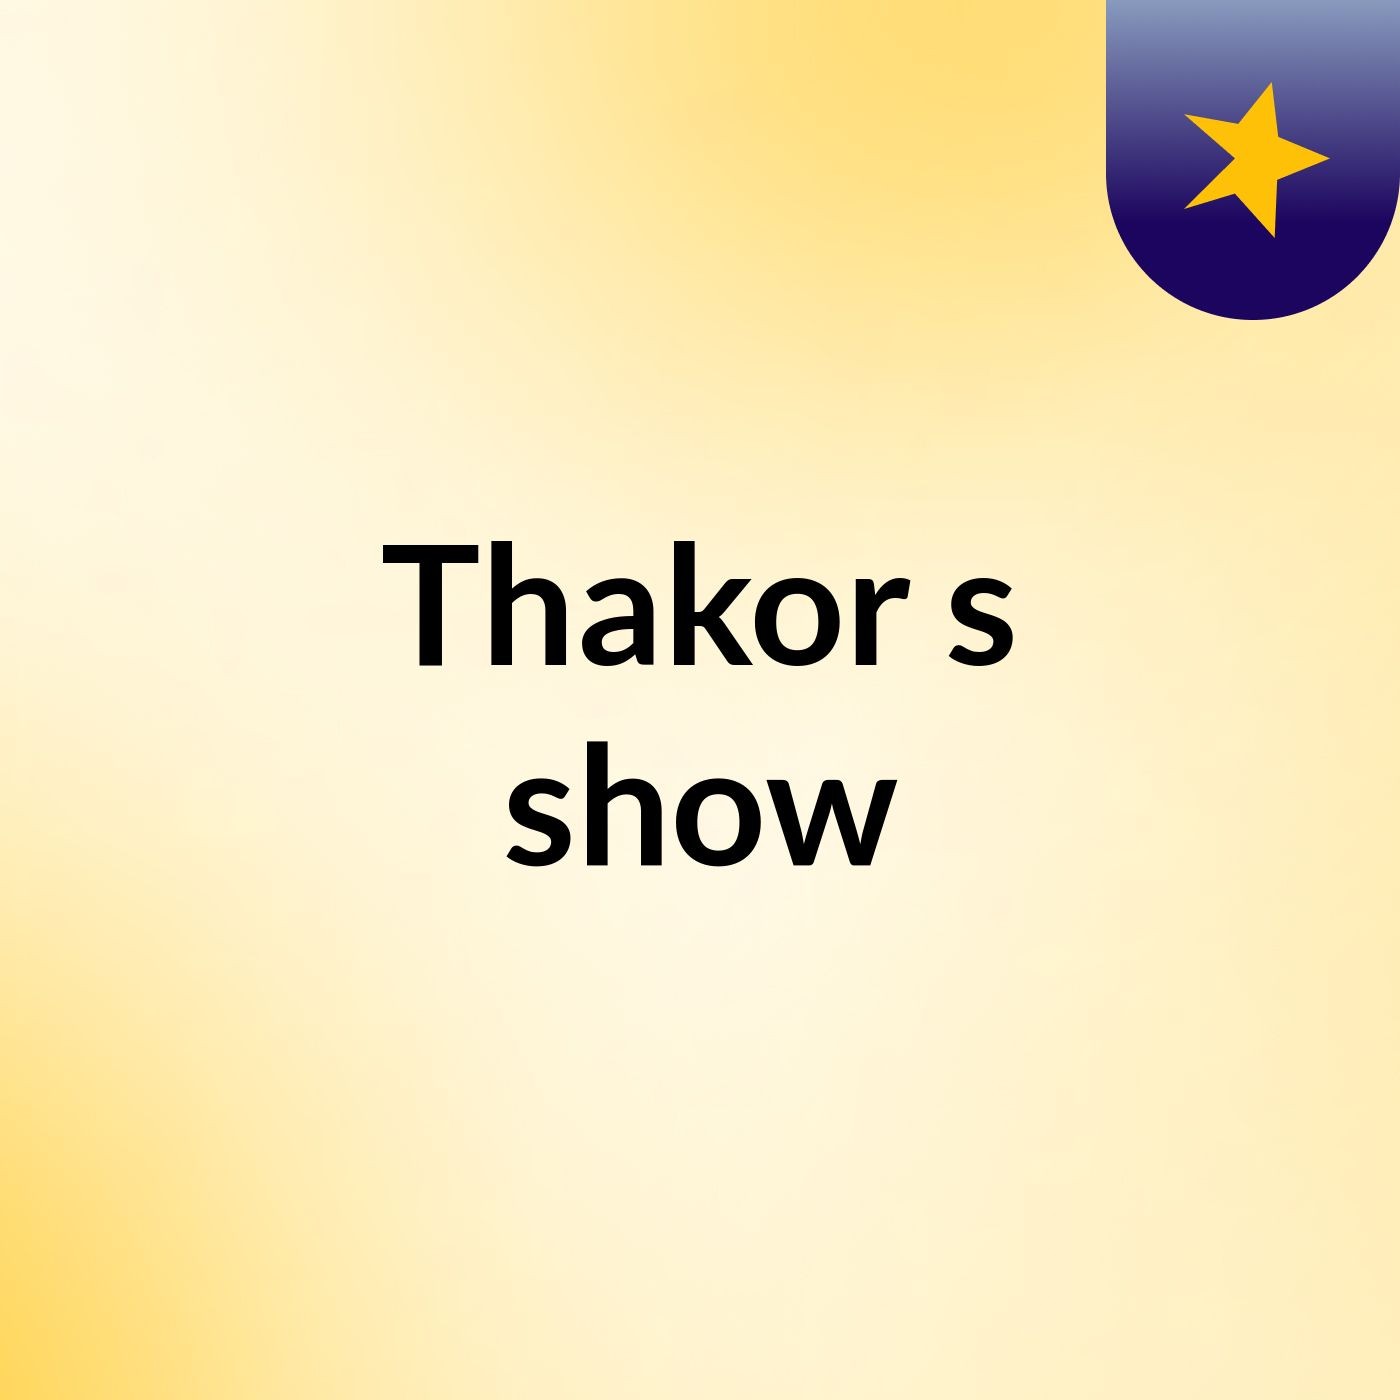 Thakor's show